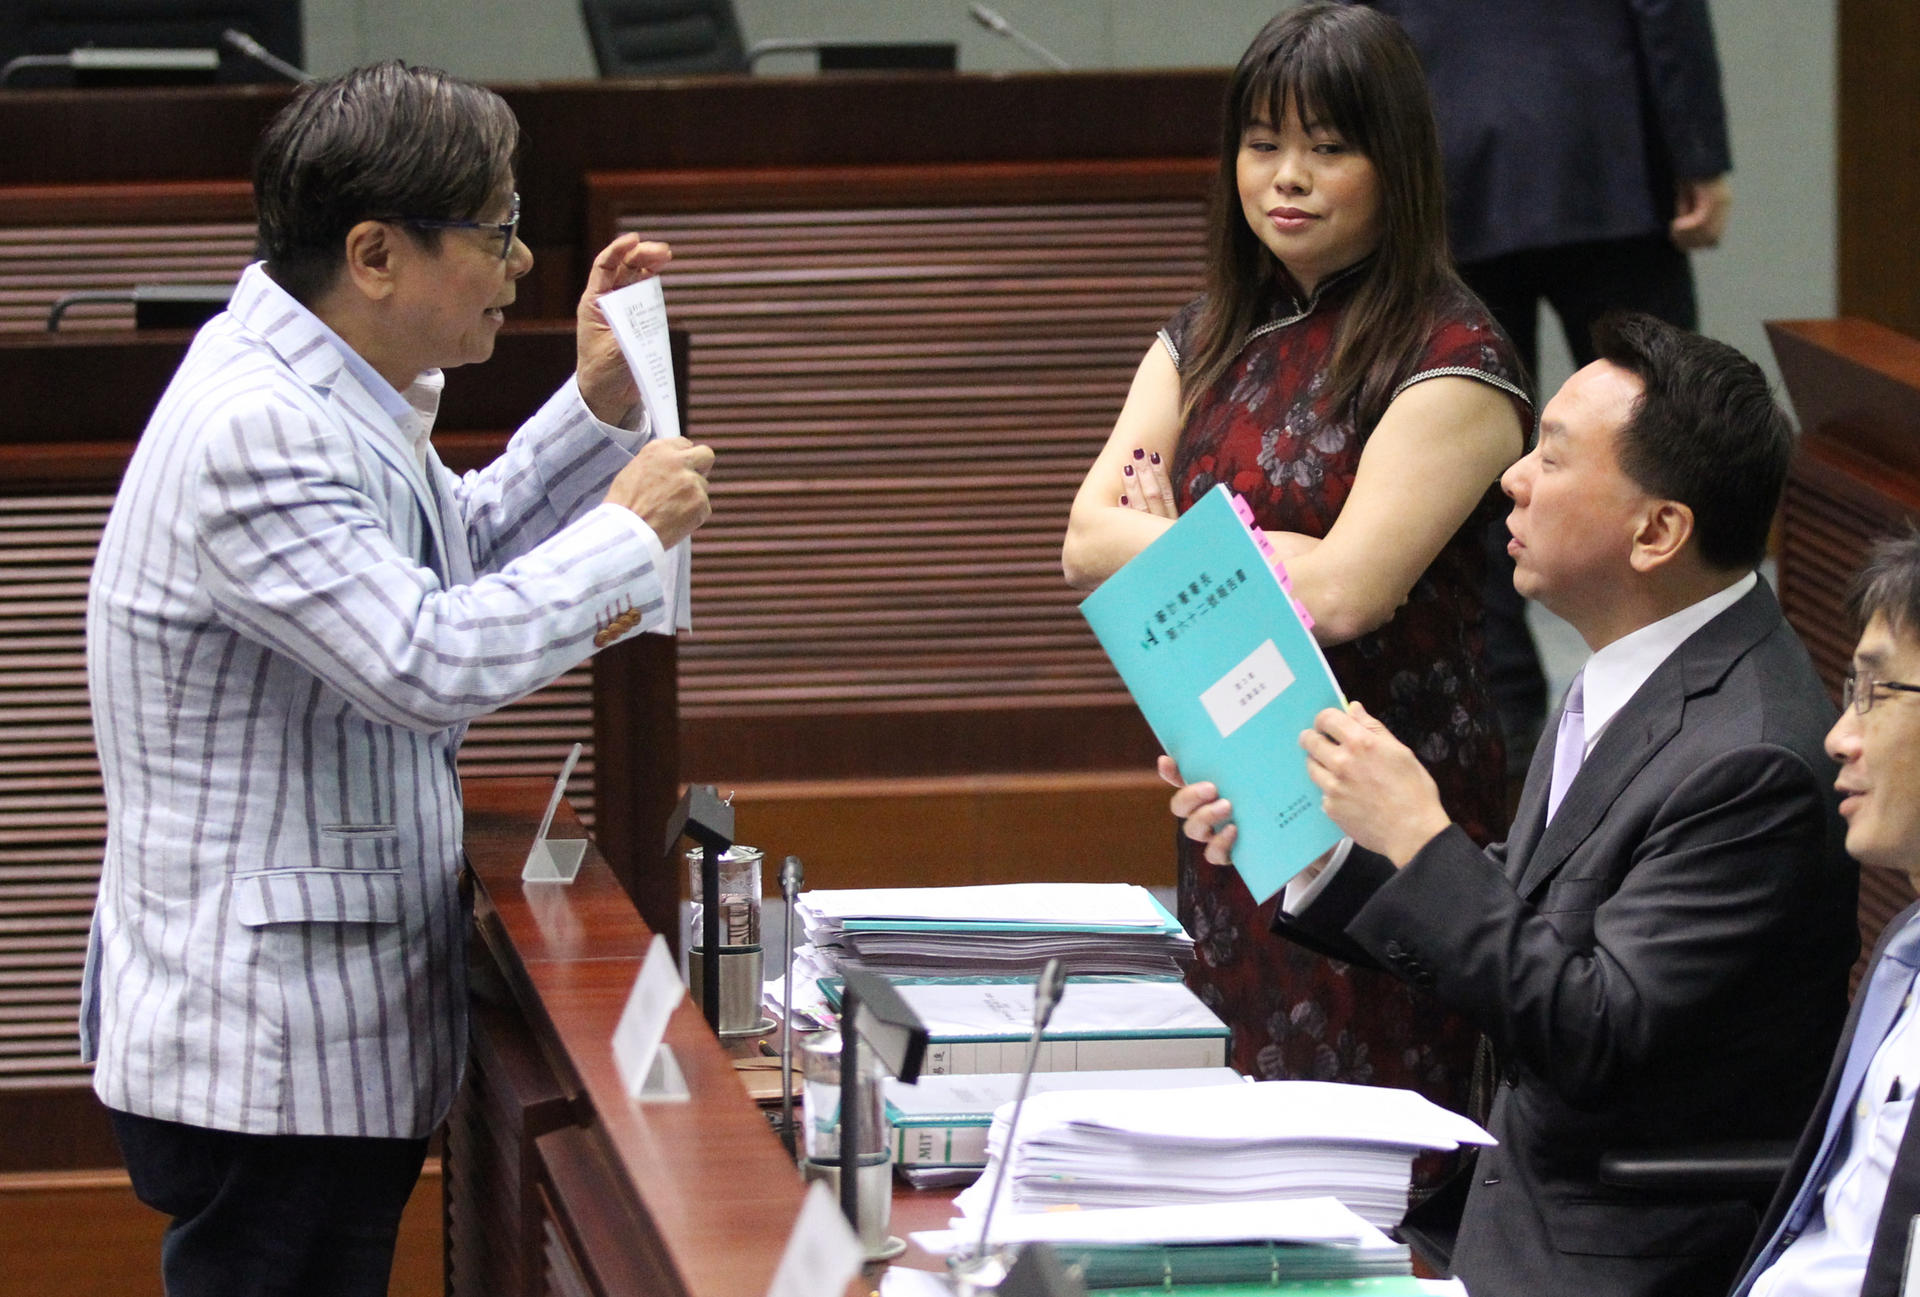 Lawmaker Wong Yuk-man speaks to Permanent Secretary Andrew Wong during a break in yesterday's hearing. Photo: Edward Wong